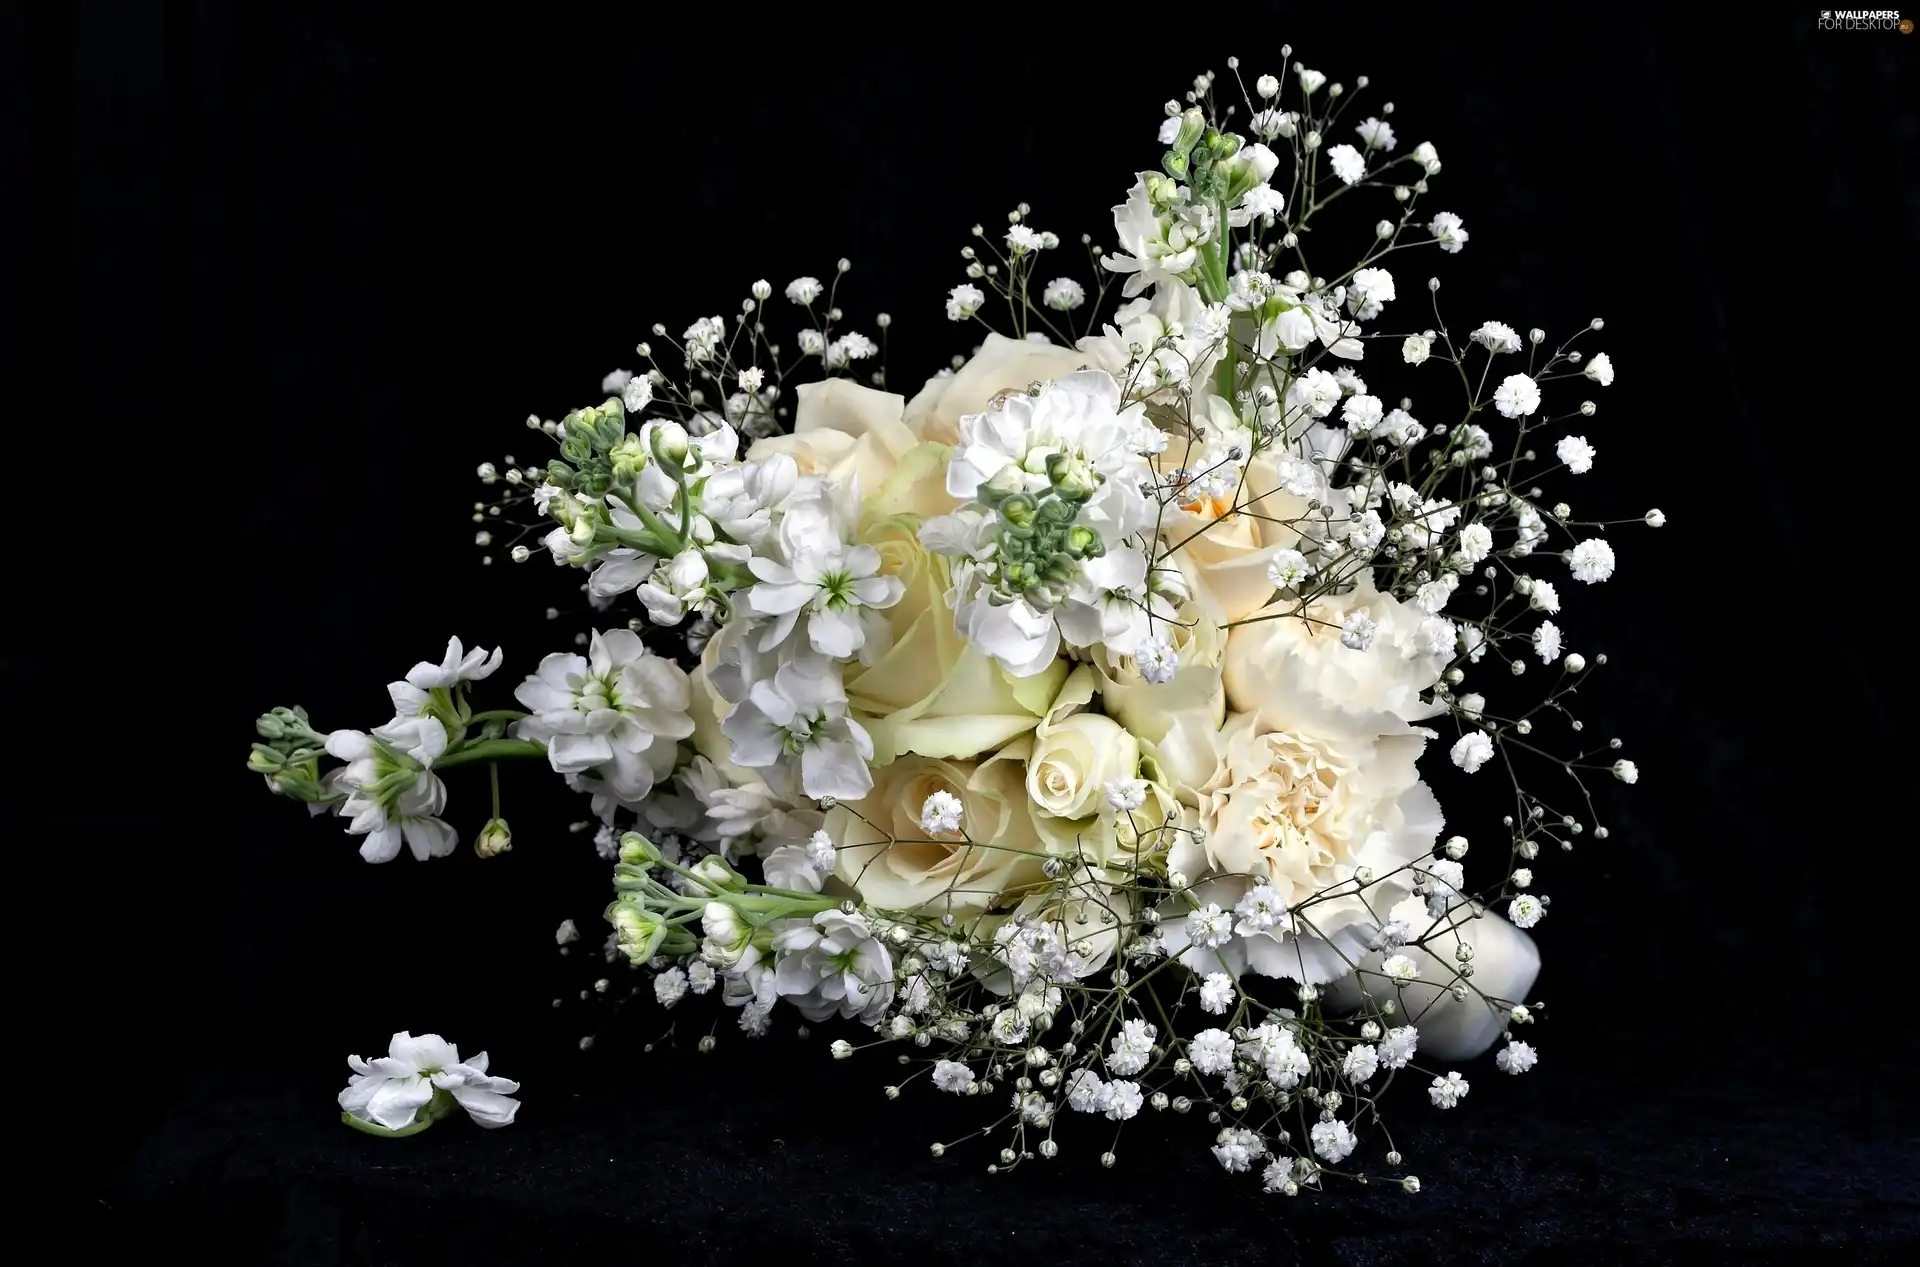 White, Gipsówka, composition, roses